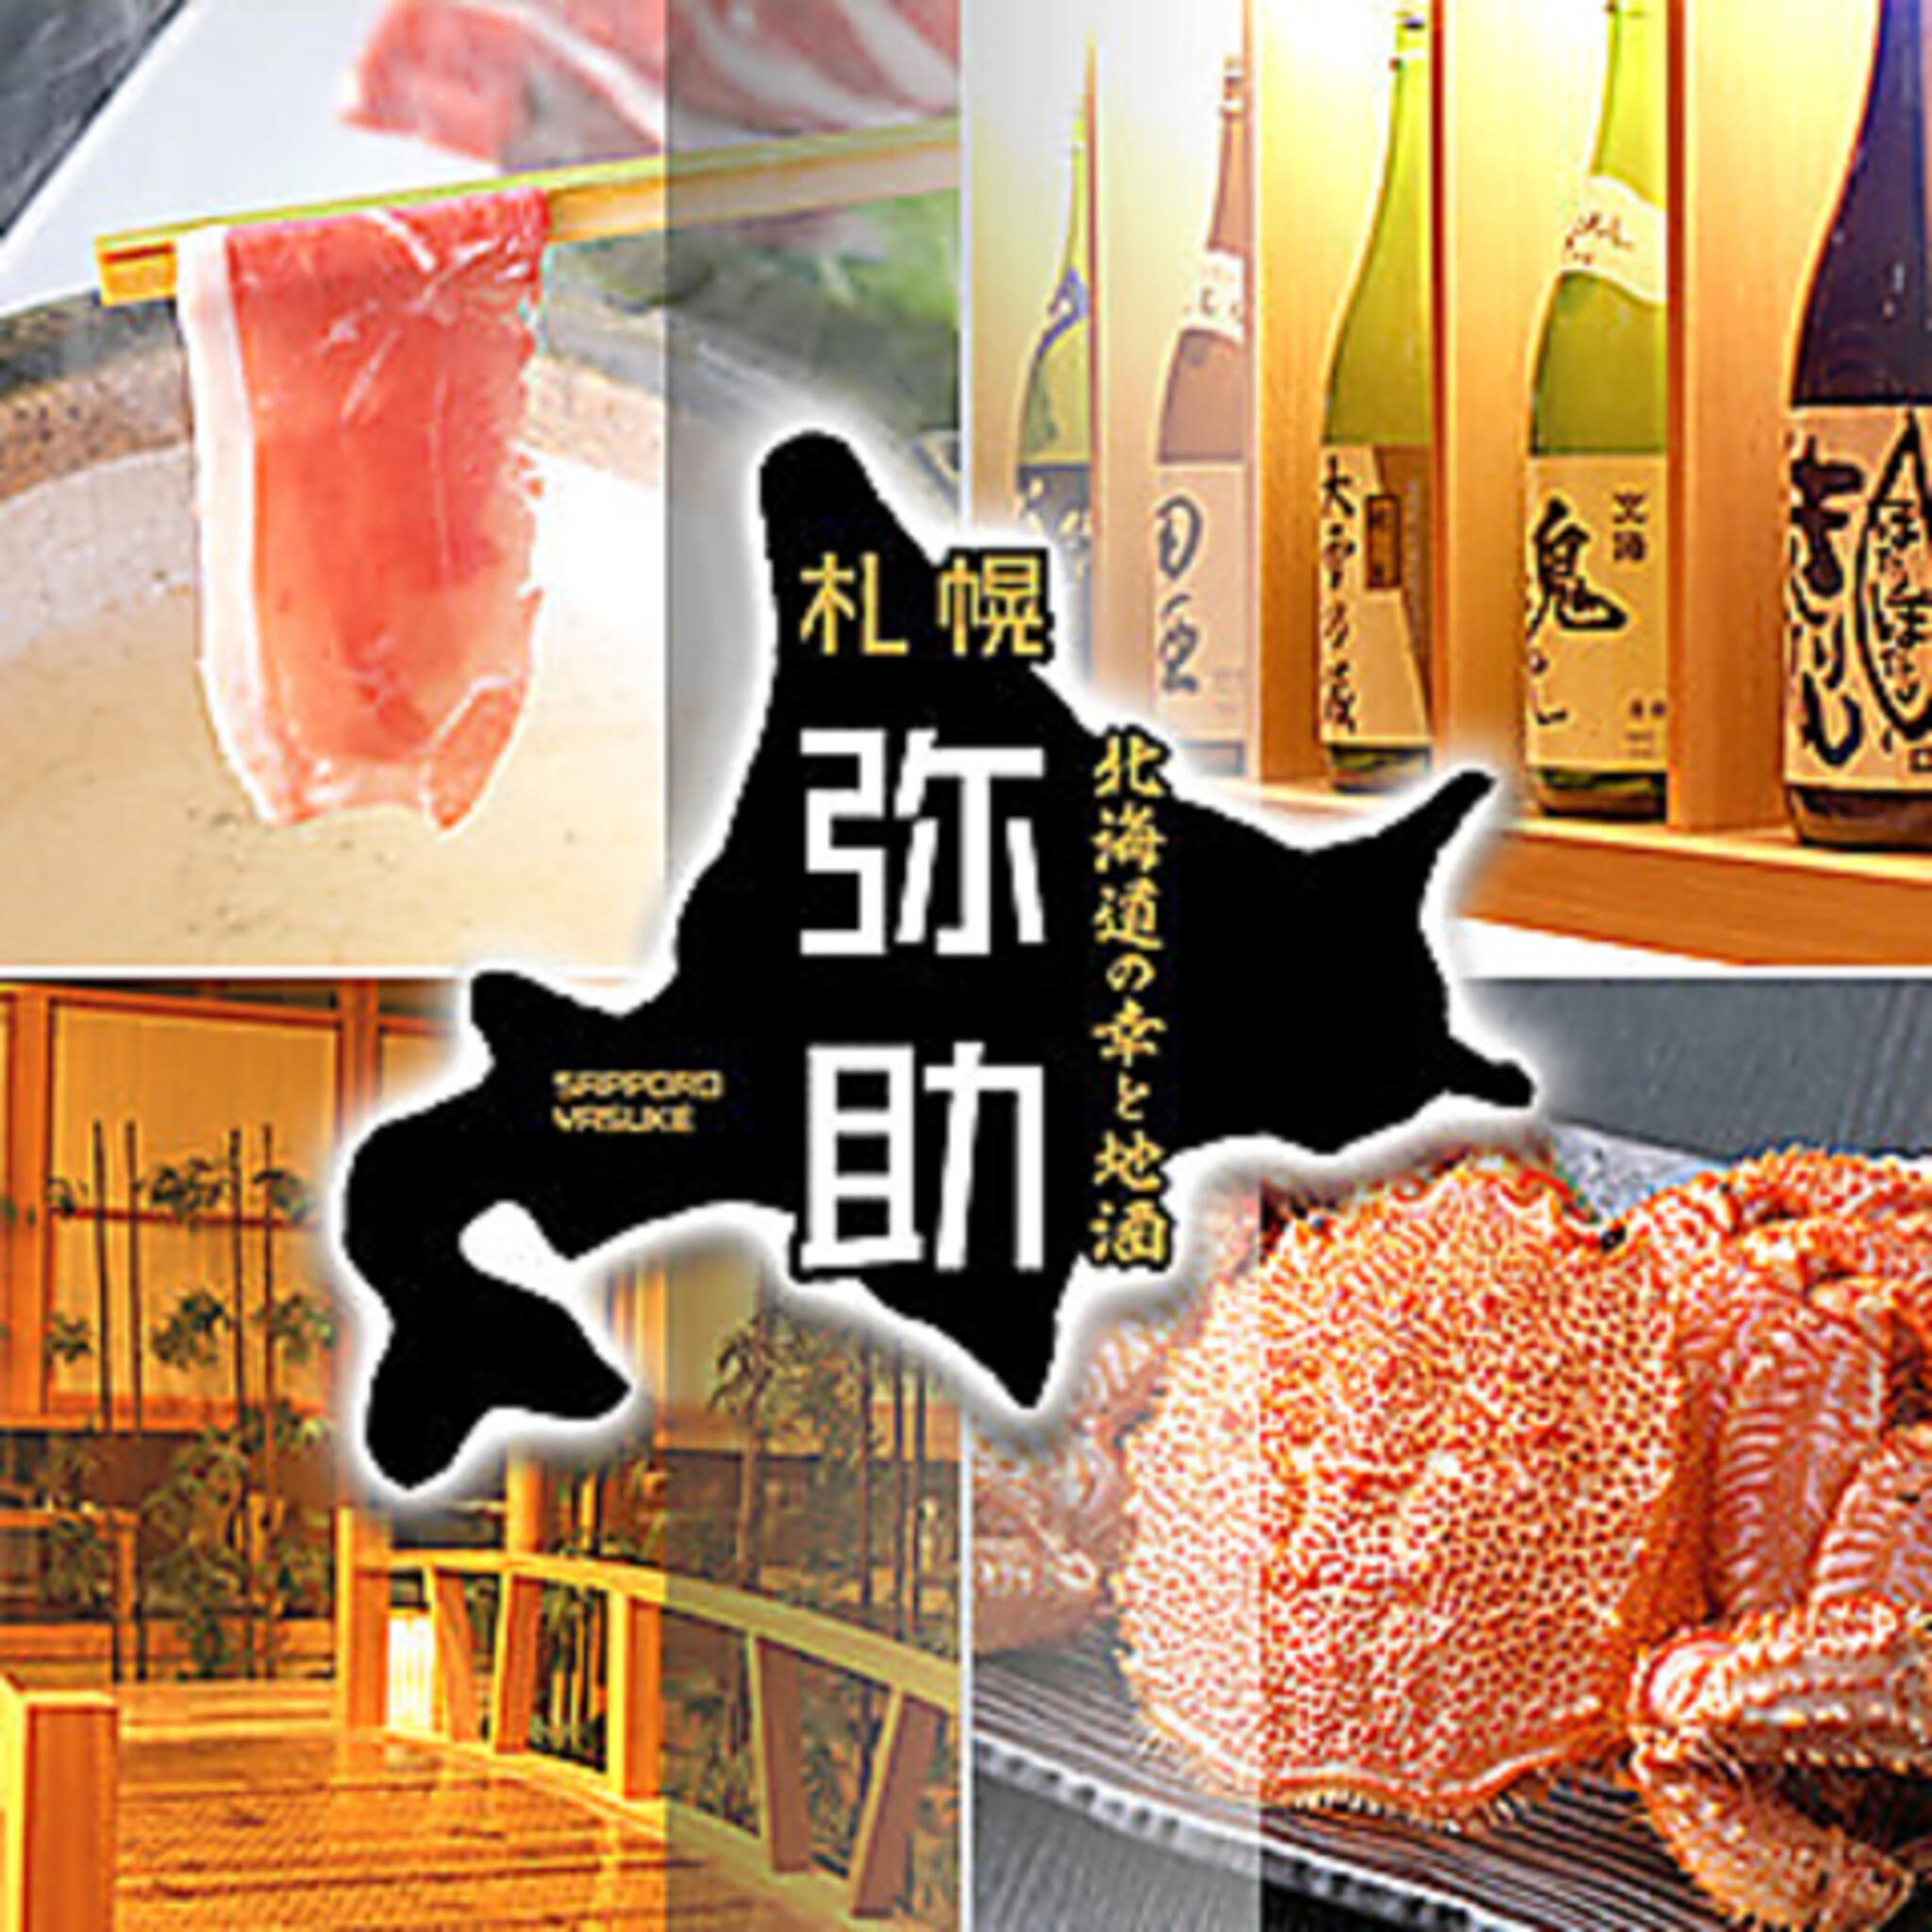 北海道の幸と地酒 札幌弥助 海浜幕張店の代表写真1